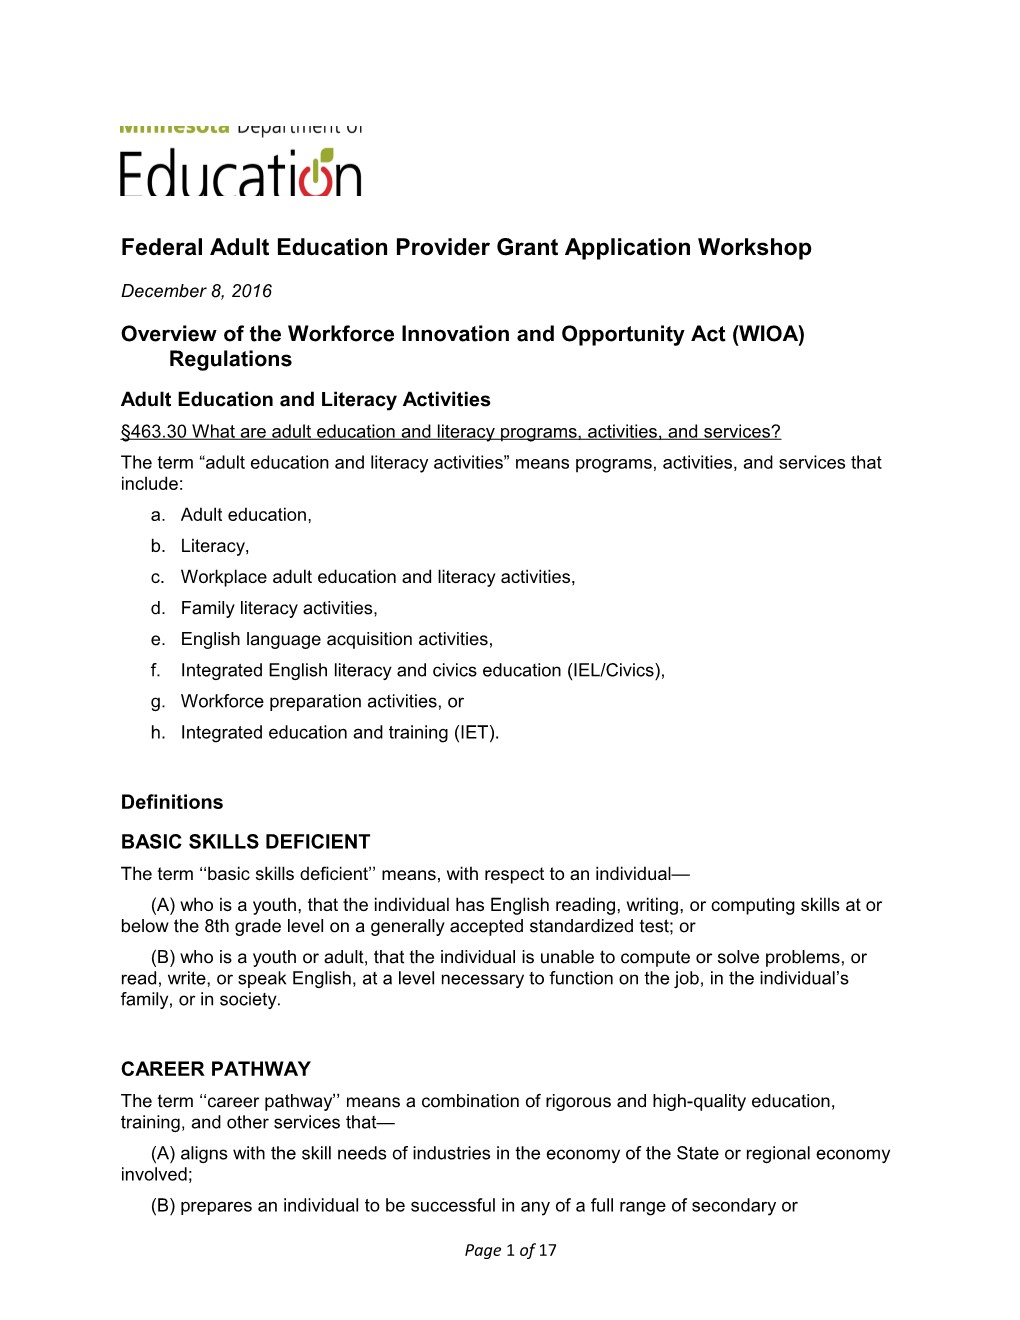 Federal Adult Education Provider Grant Application Workshop